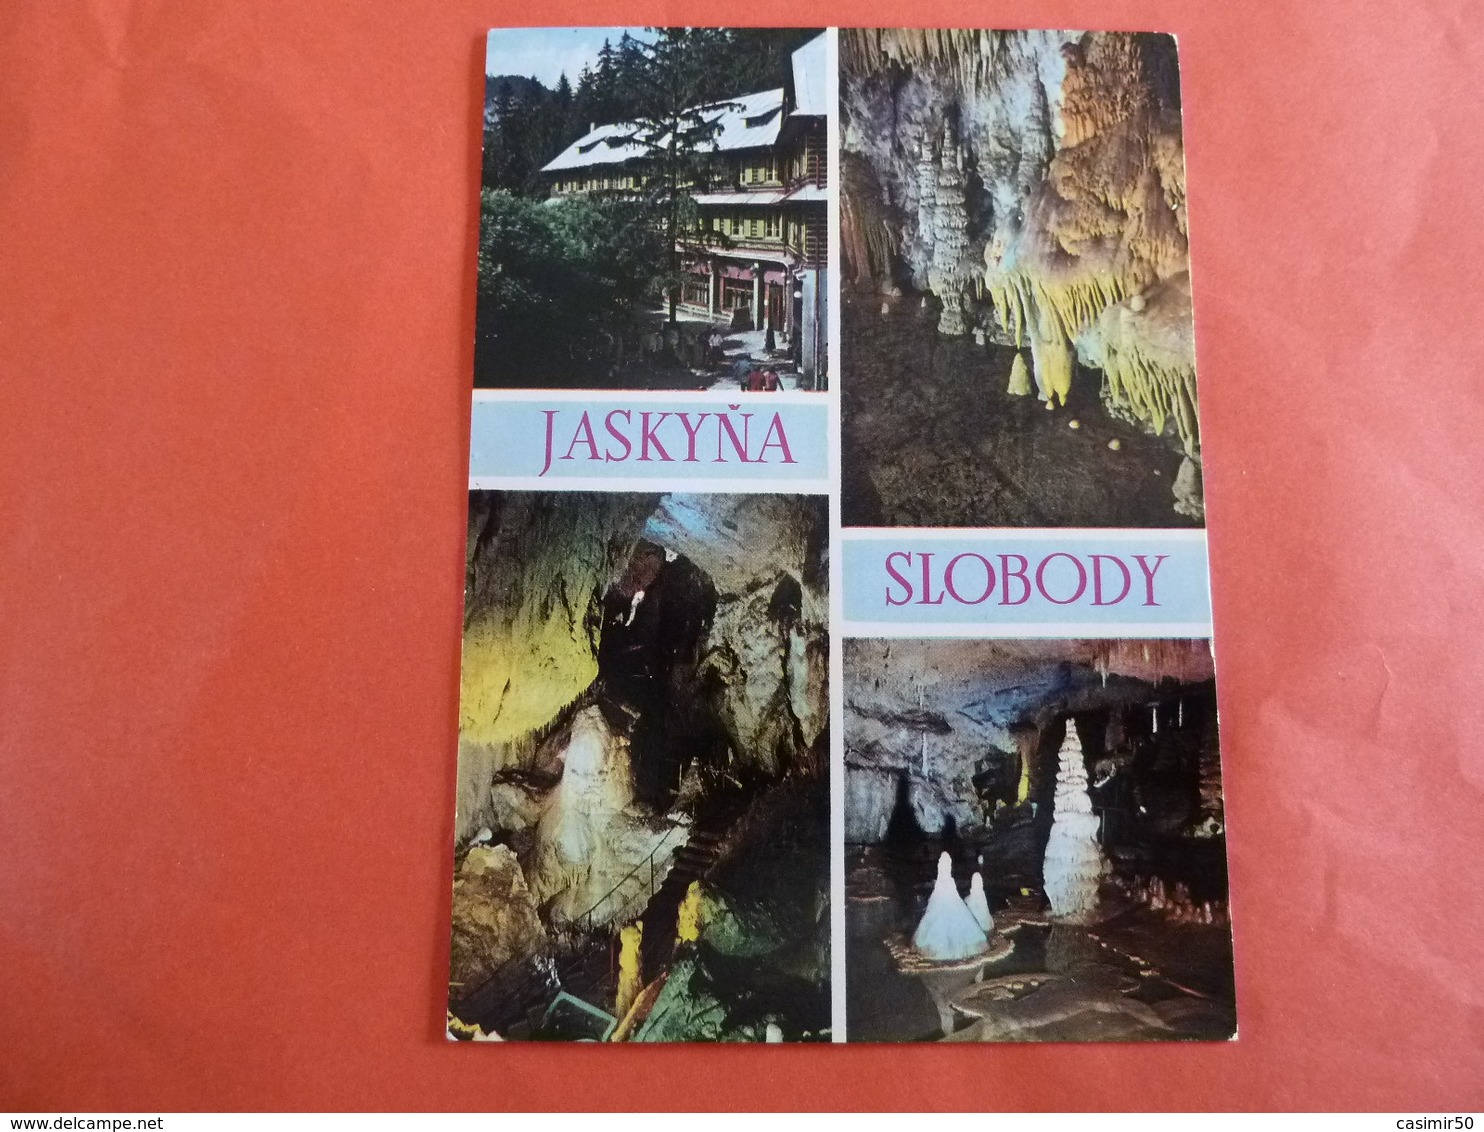 JASKYNA SLOBODY - Slowakei